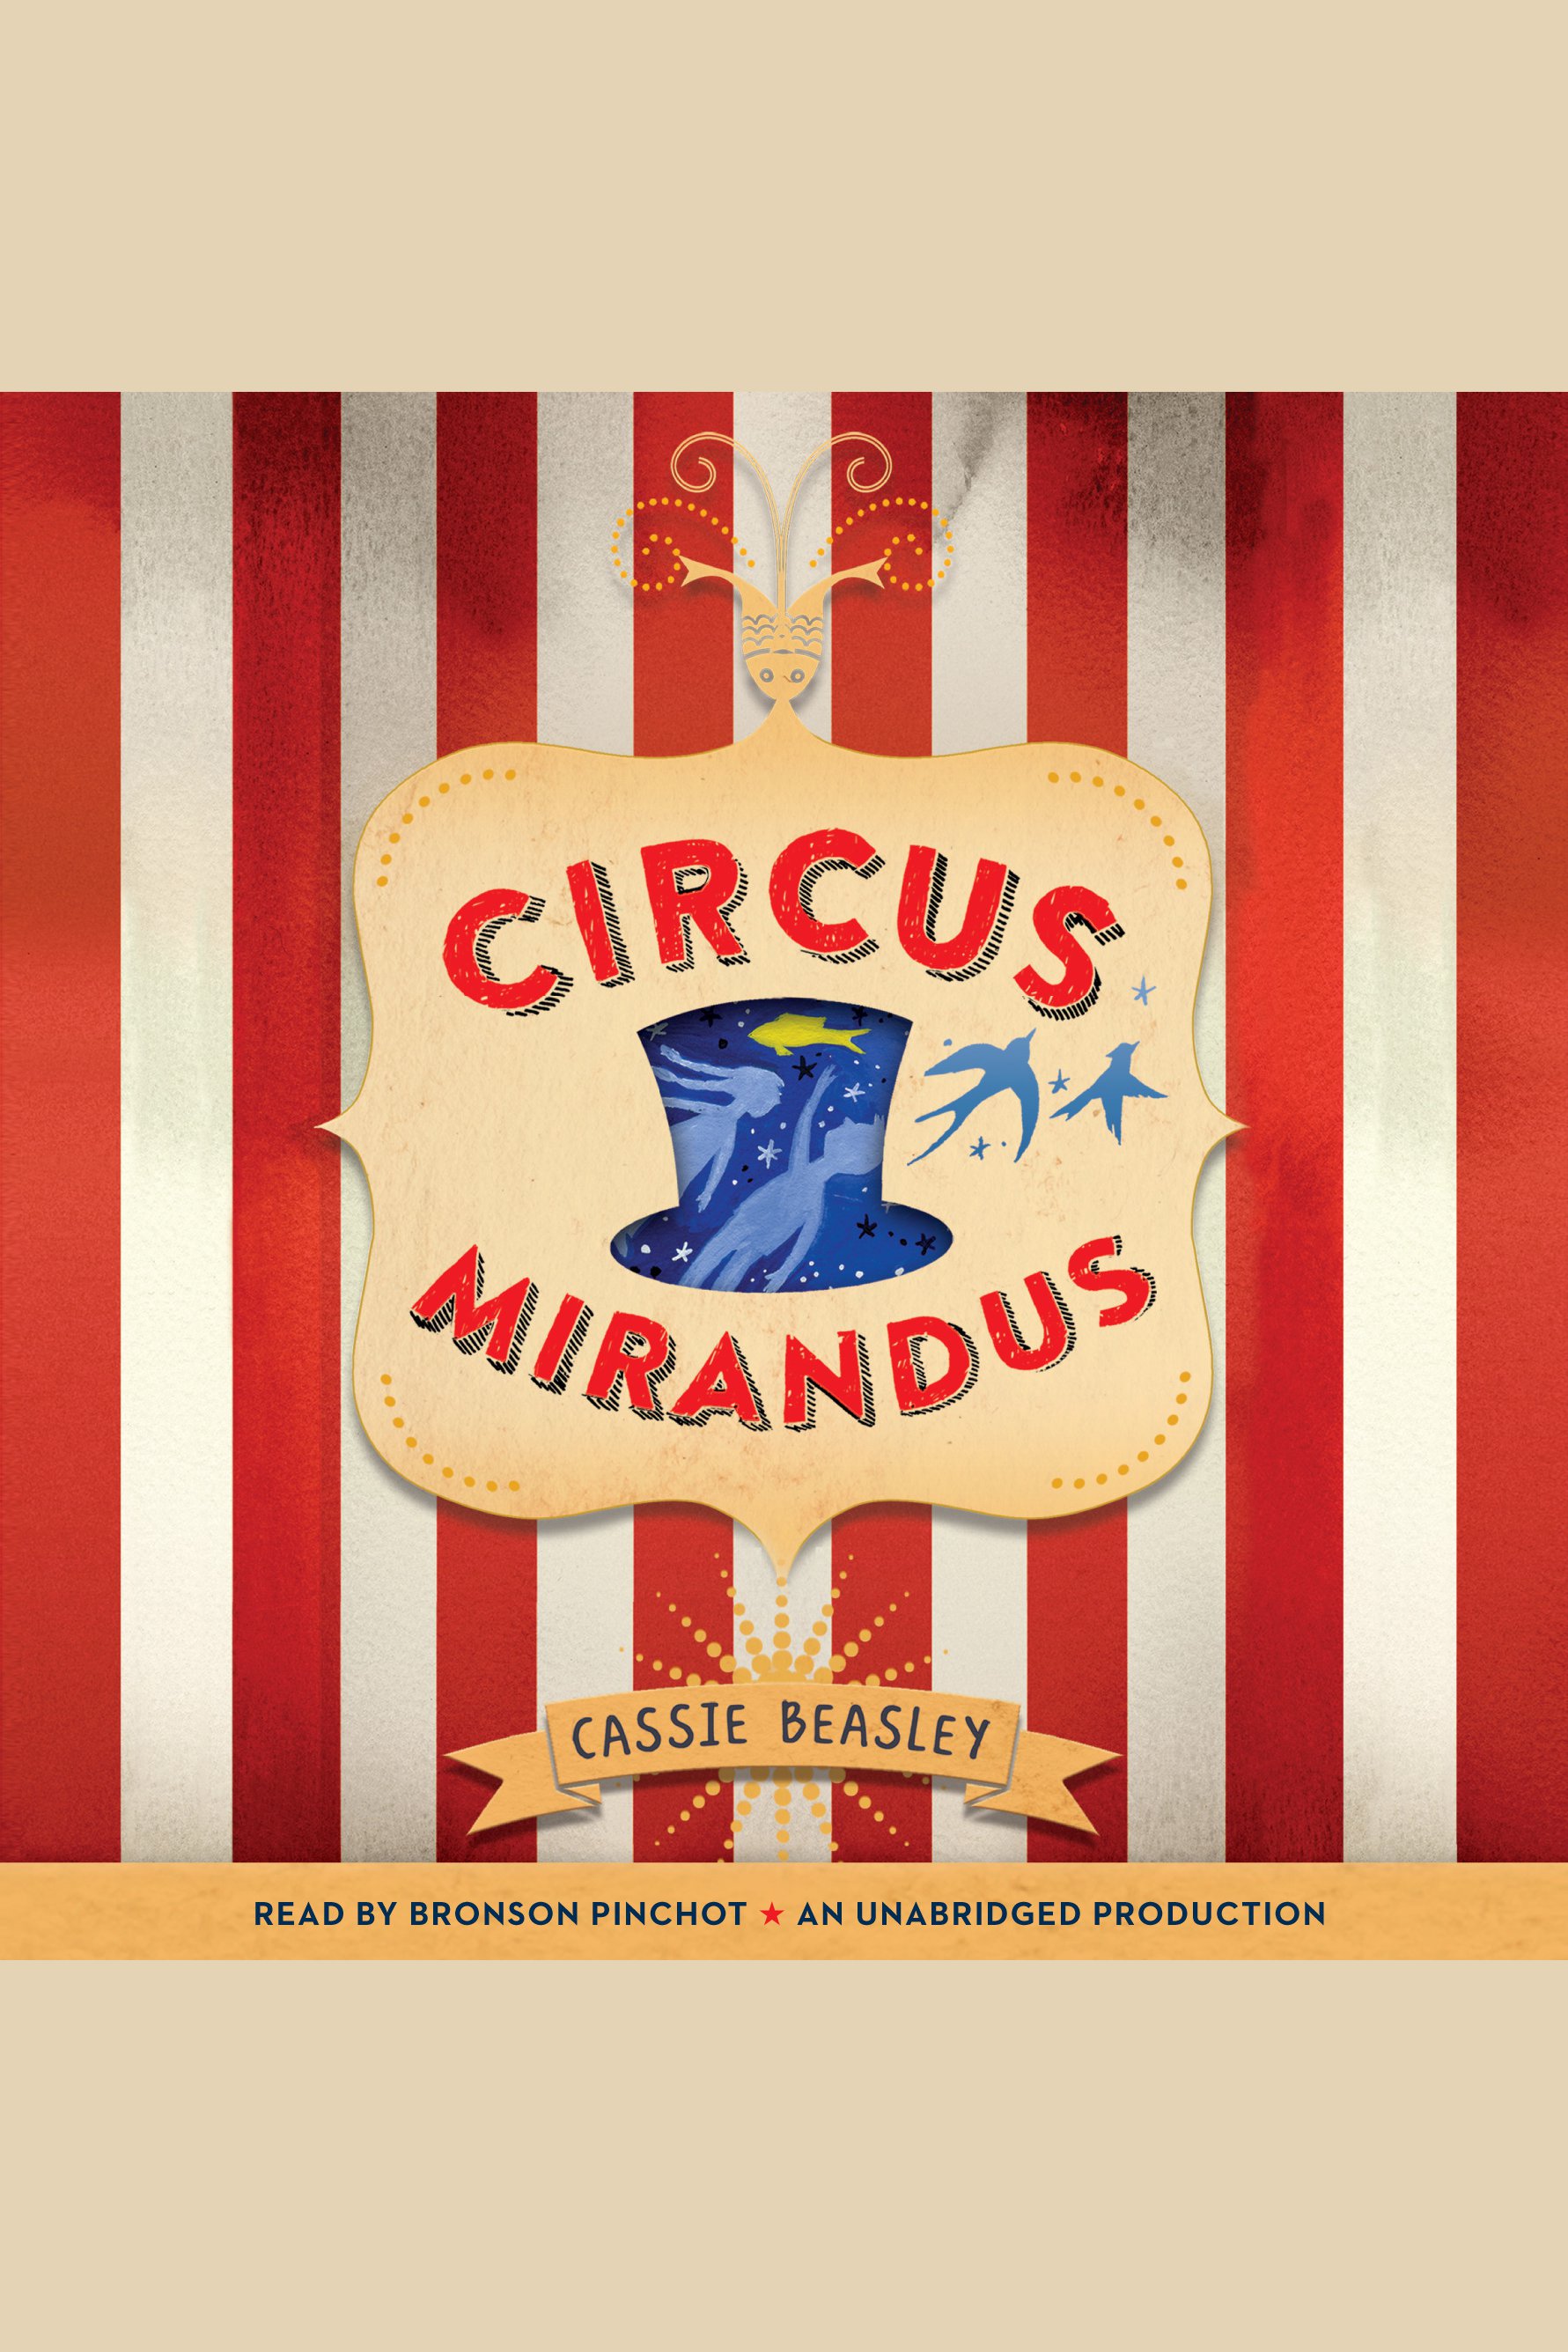 Circus mirandus cover image